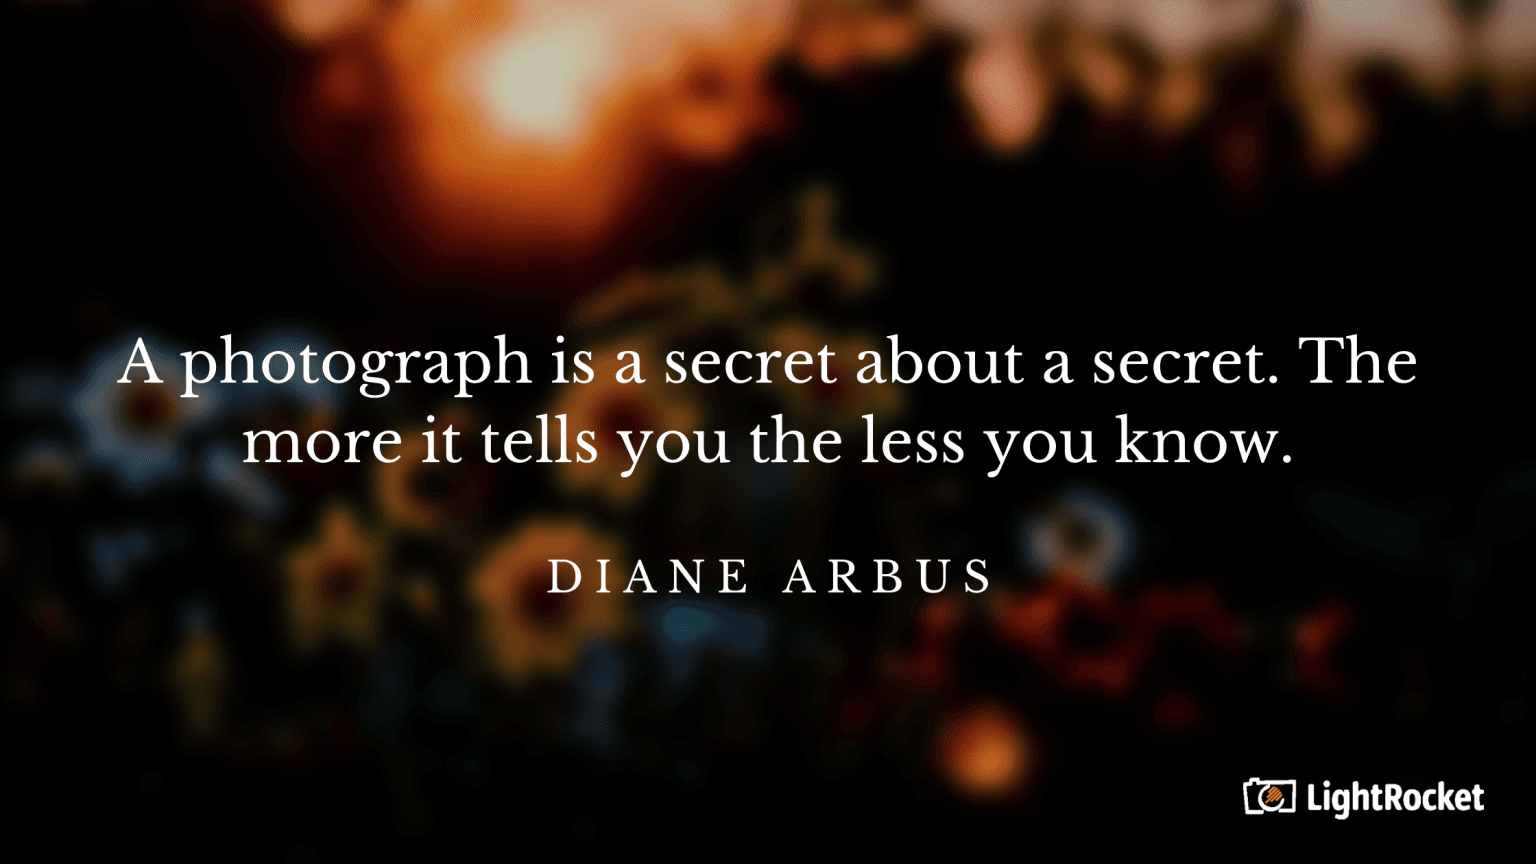 “A photograph is a secret about a secret. The more it tells you the less you know.” – Diane Arbus